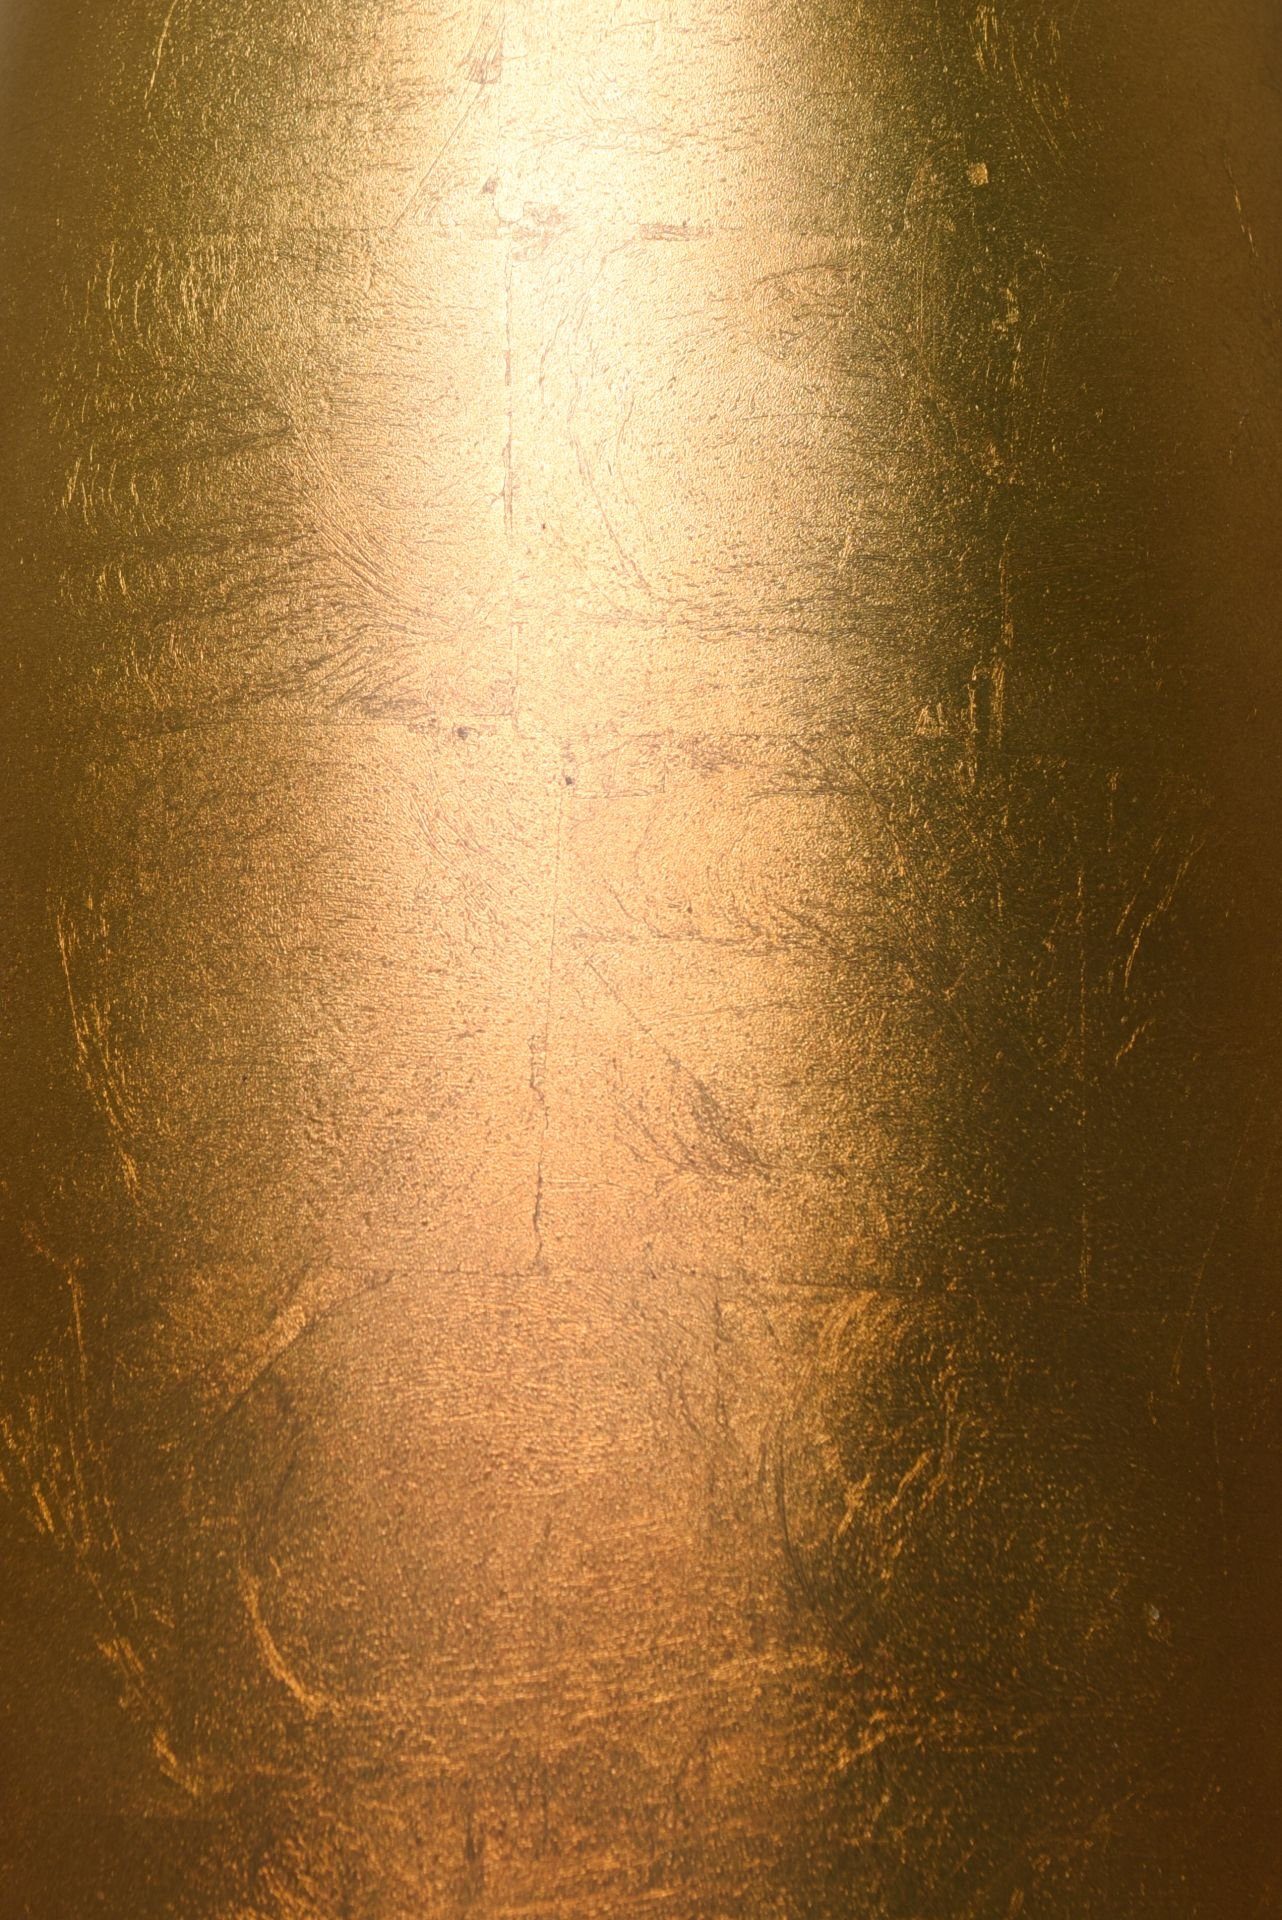 VIVANNO Bodenvase Bodenvase Standvase Gold/Braun ACCENT Fiberglas 14x8x41 cm 